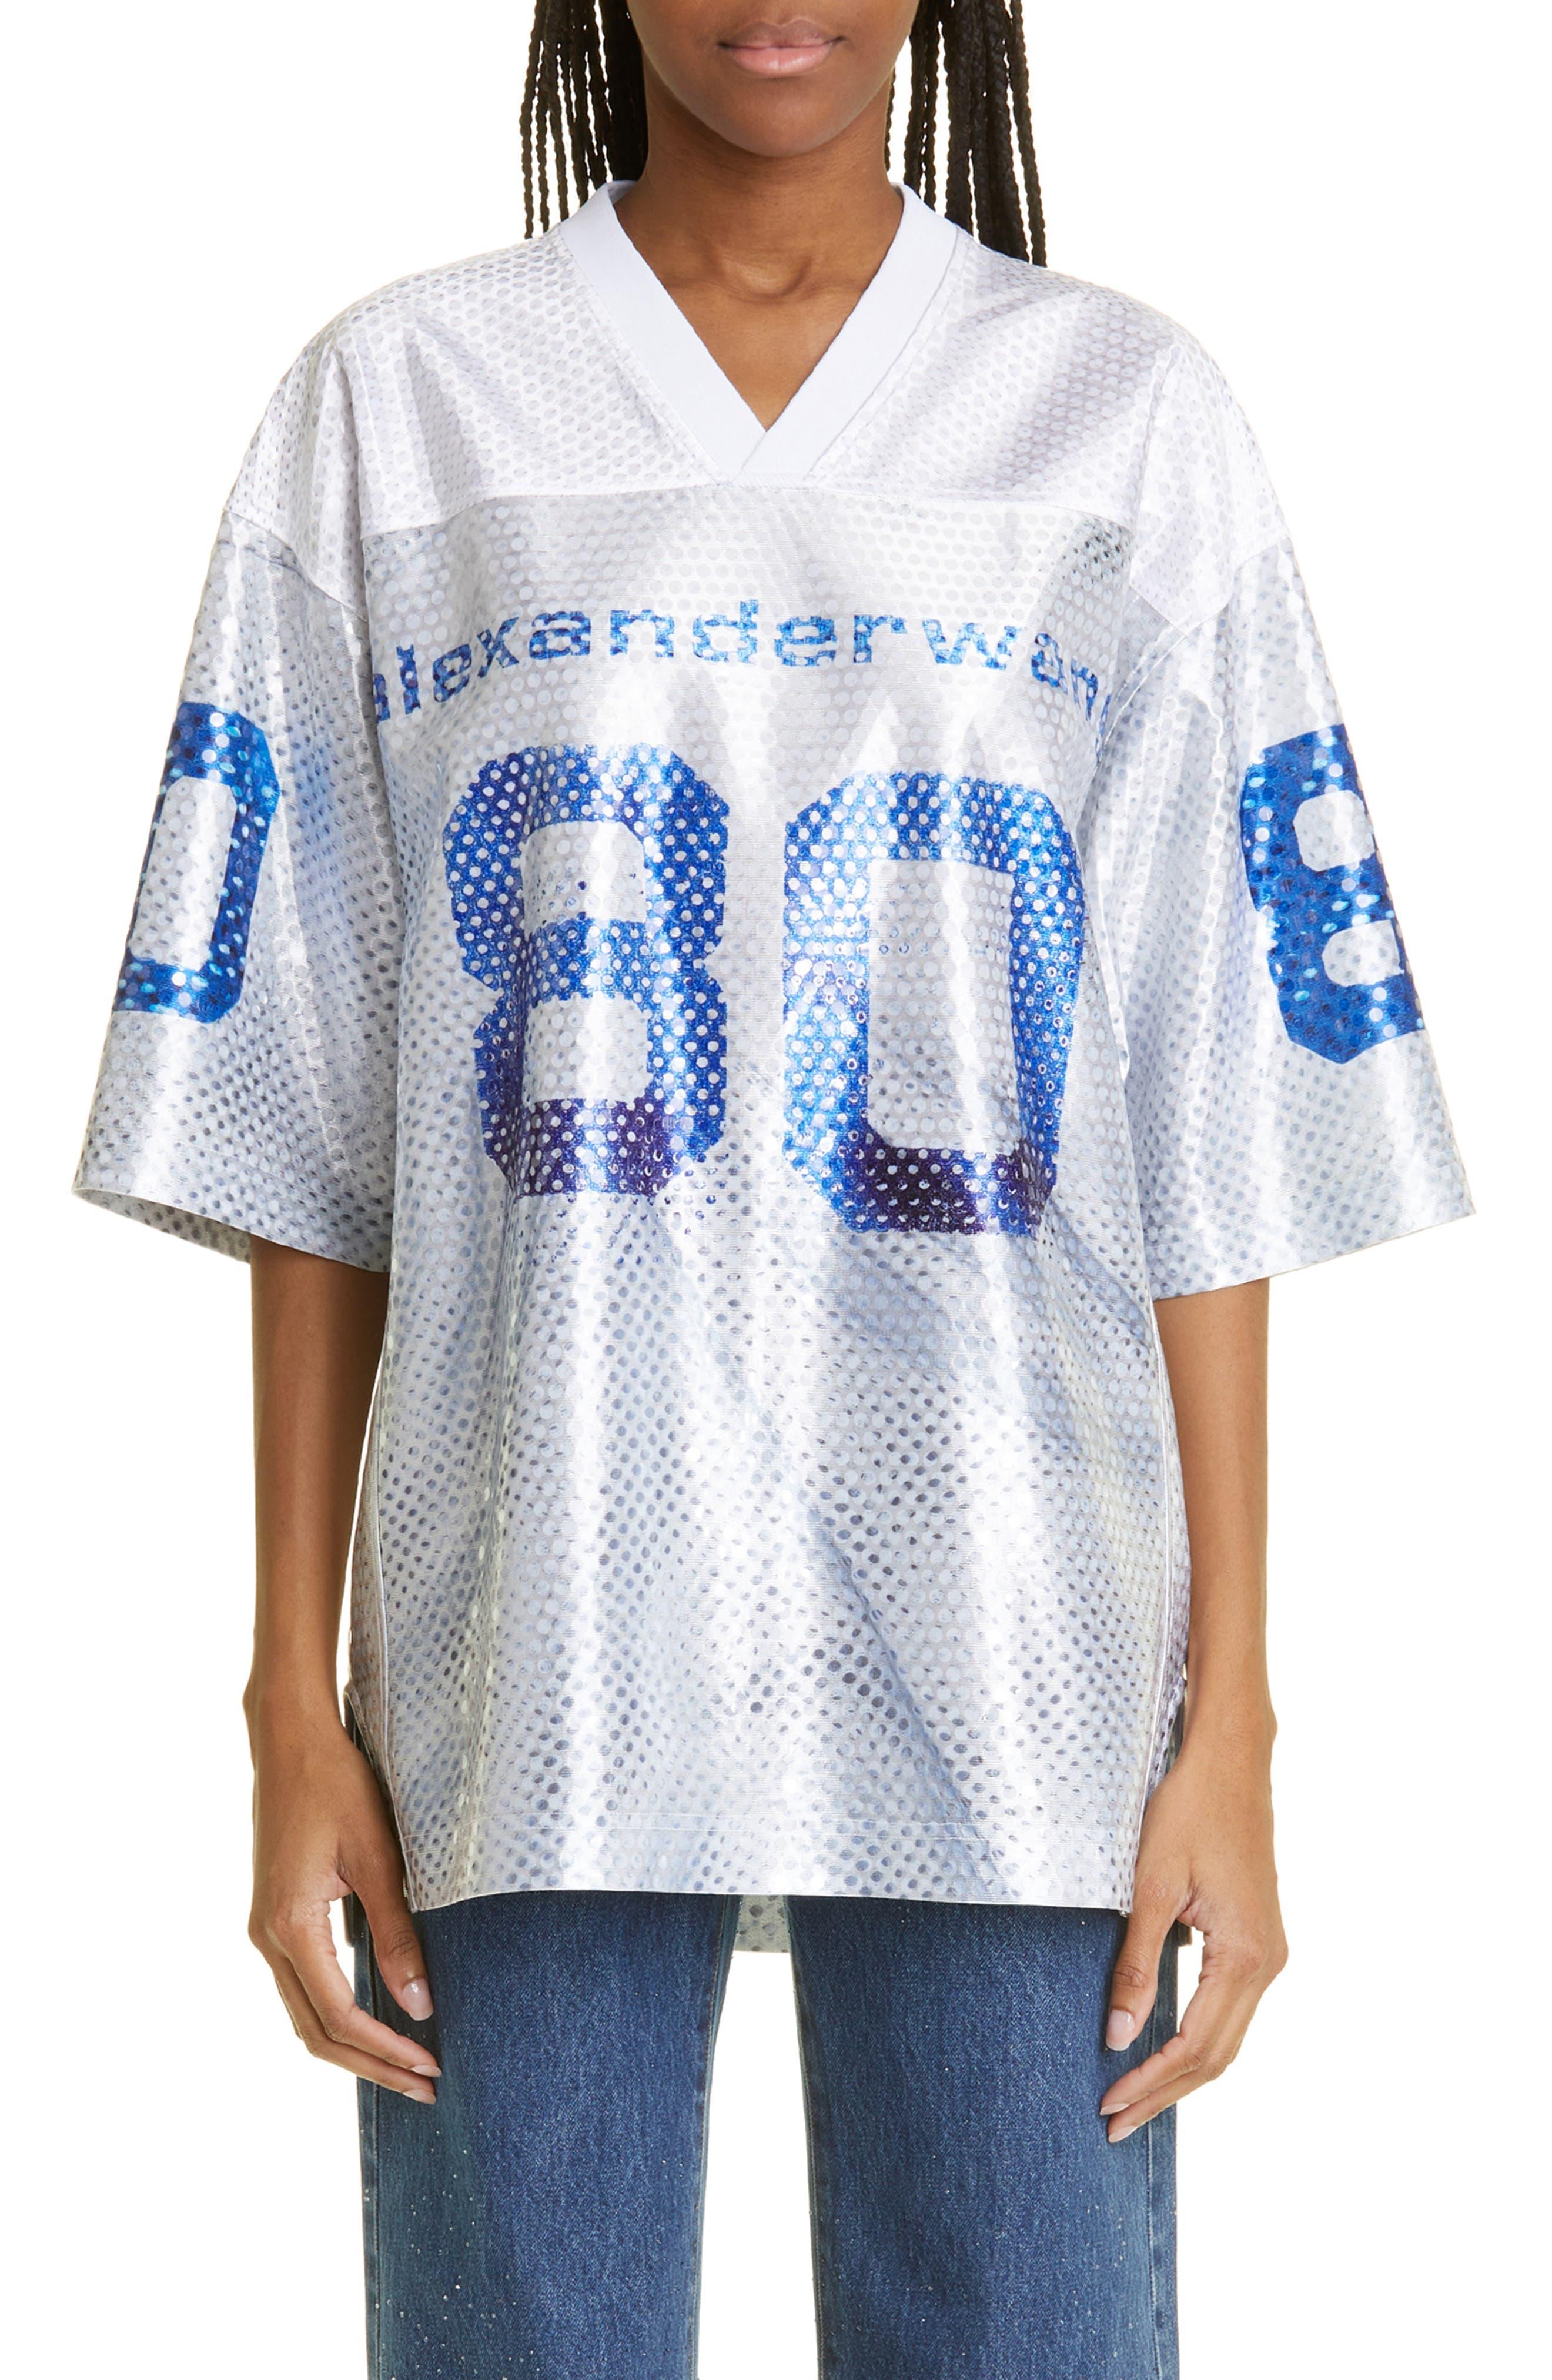 Alexander Wang Oversize Logo Sequin Satin Football Jersey in White | Lyst